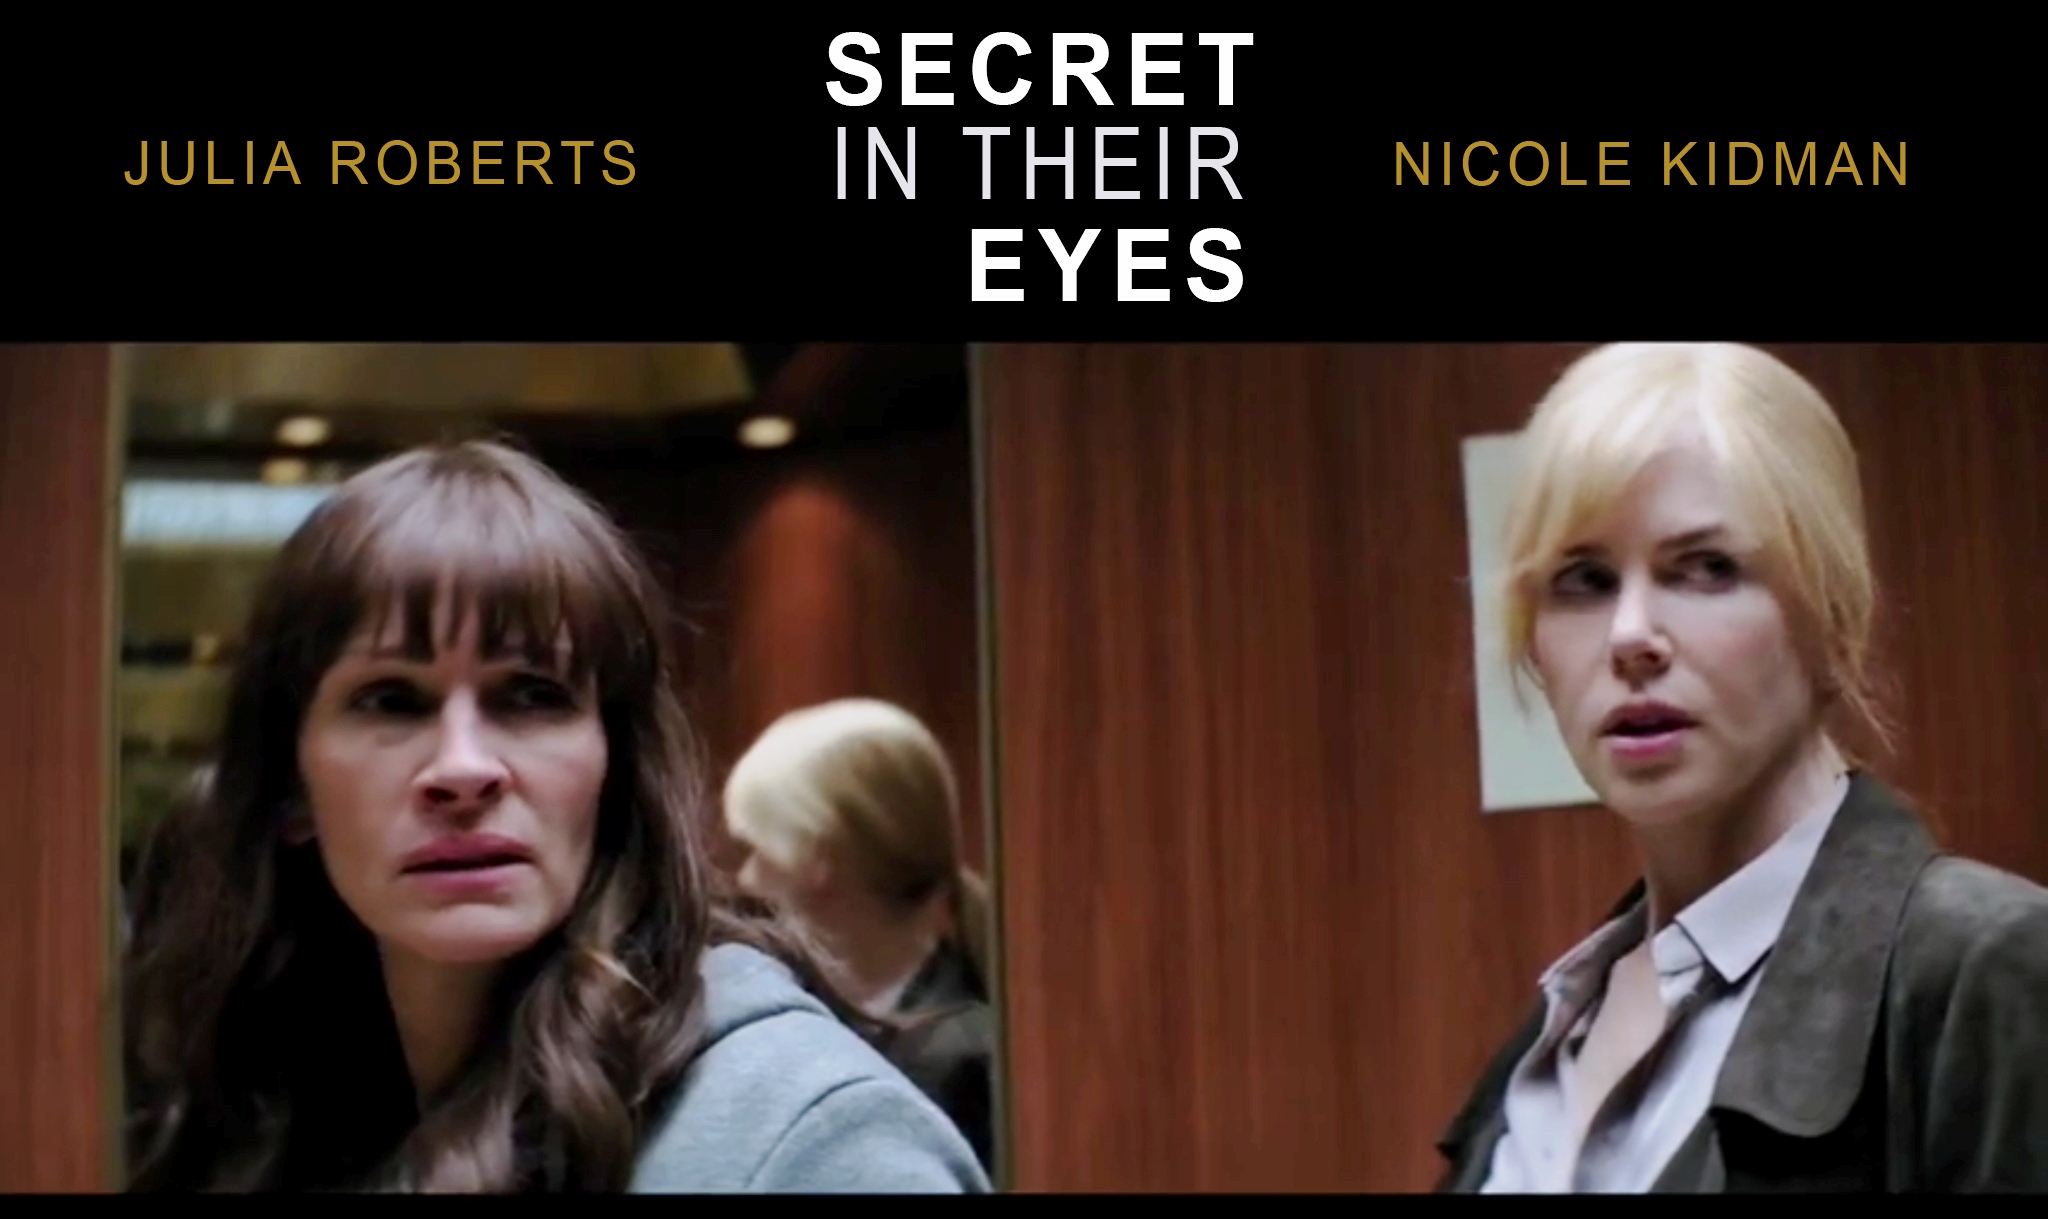 Roberts, Kidman work first time in ‘Secret in Their Eyes’